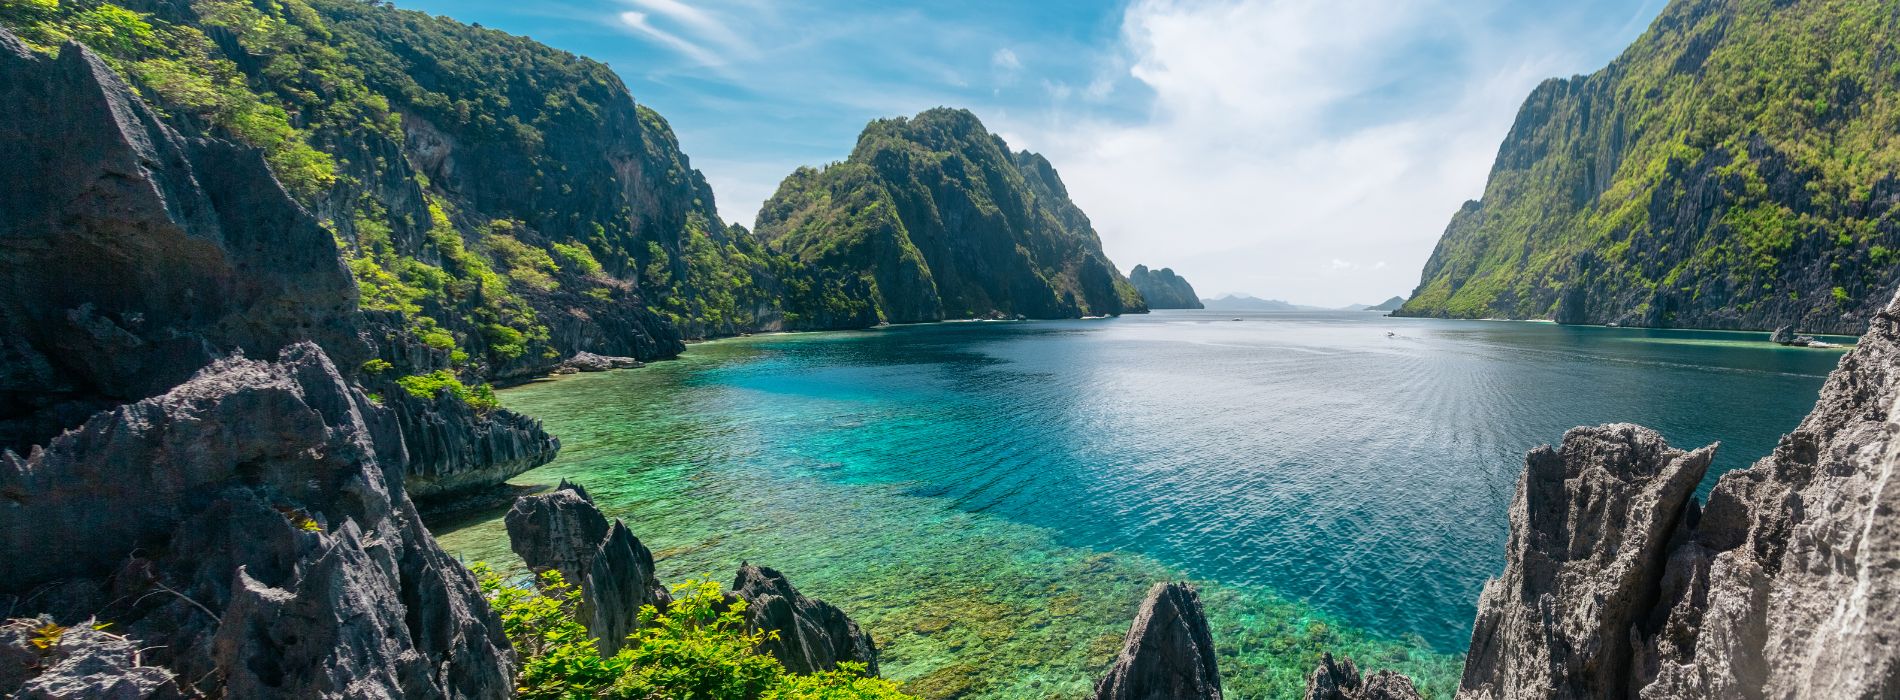 Philippines-beautiful-water